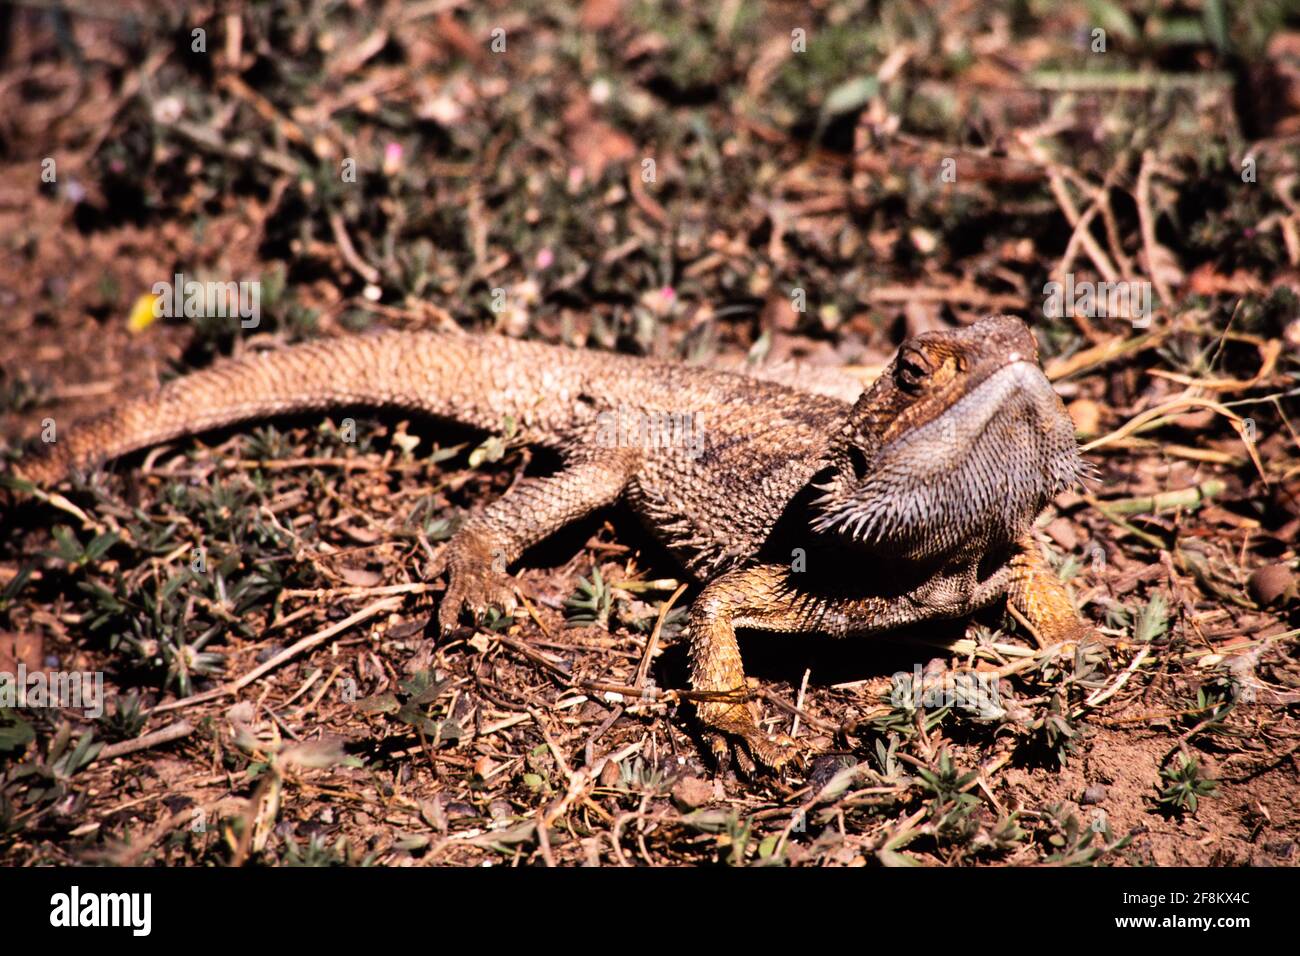 The Central Bearded Dragon, Pogona vitticeps, is native to arid Central Australia. Stock Photo